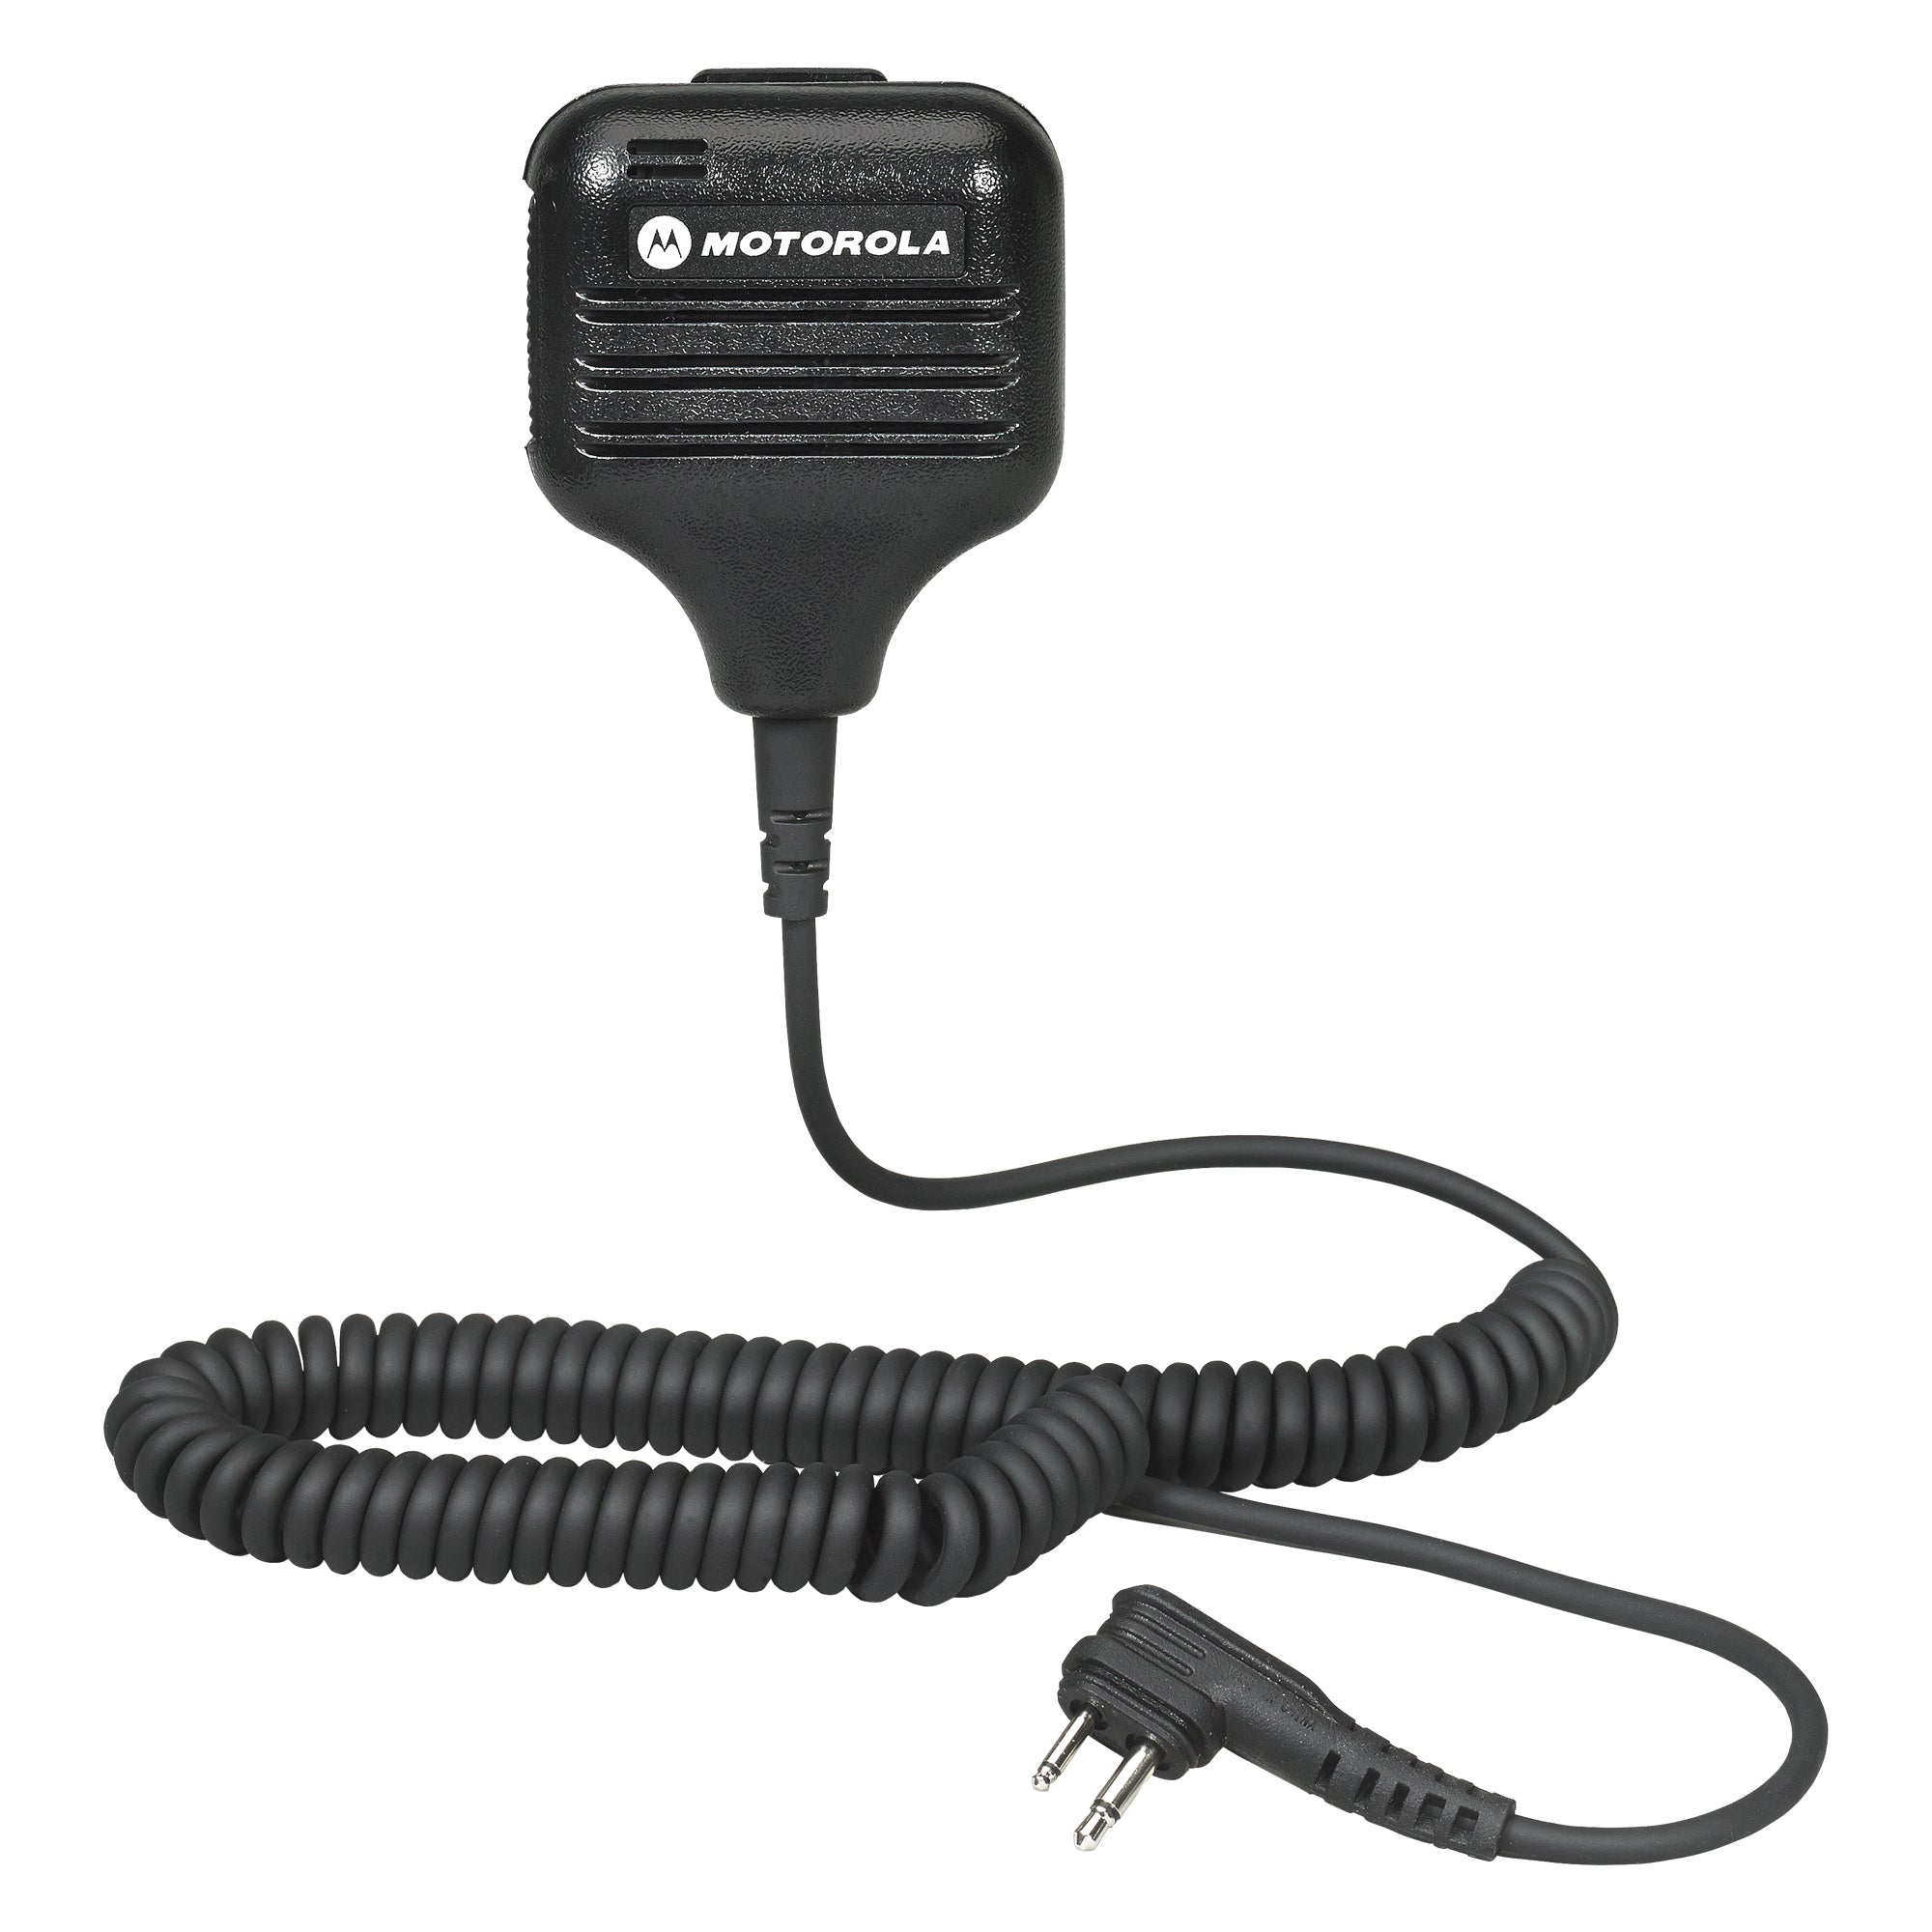 Motorola RMU2040 pack with Multi Charger and Speaker Microphones|  TwoWayRadioGear